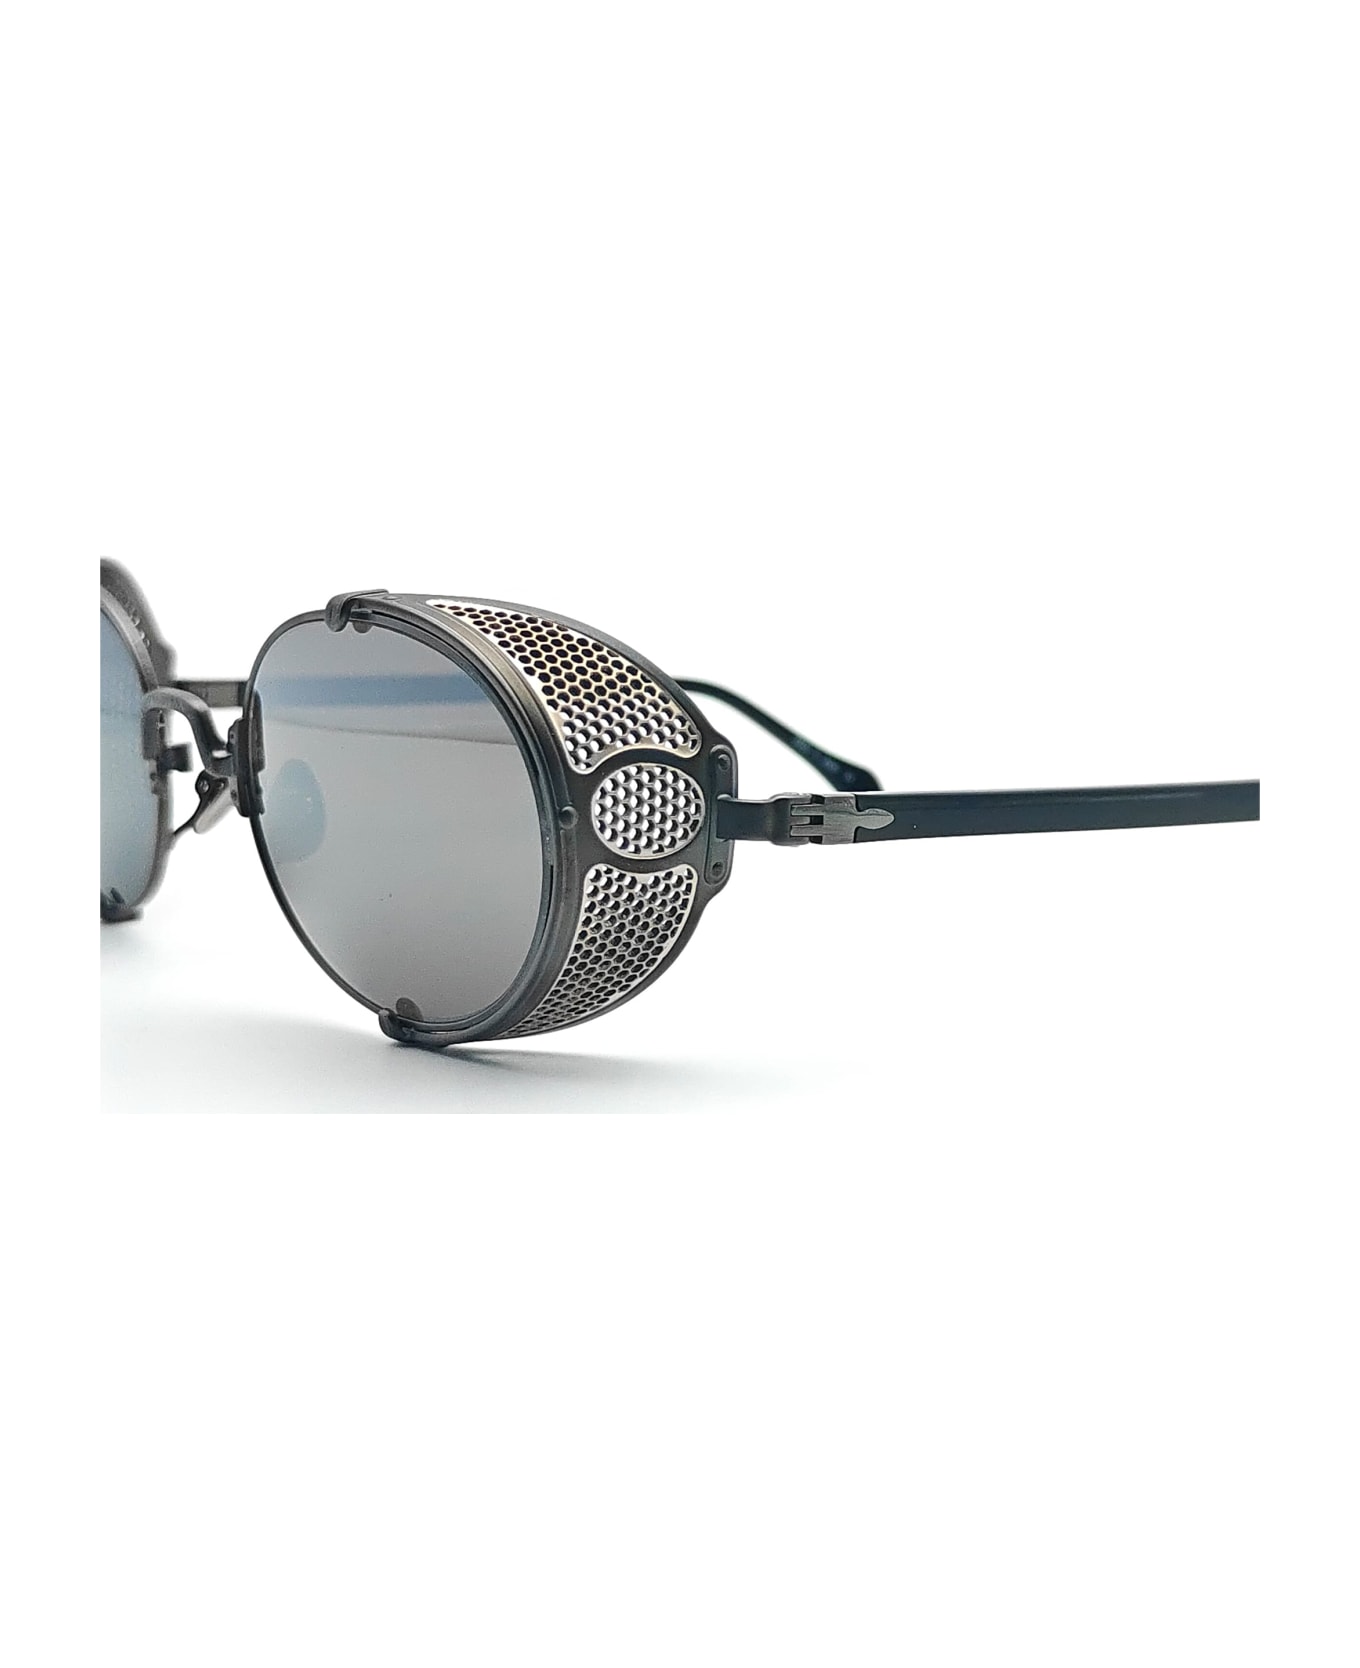 Matsuda 10610h - Matte Black Sunglasses - Matte black サングラス